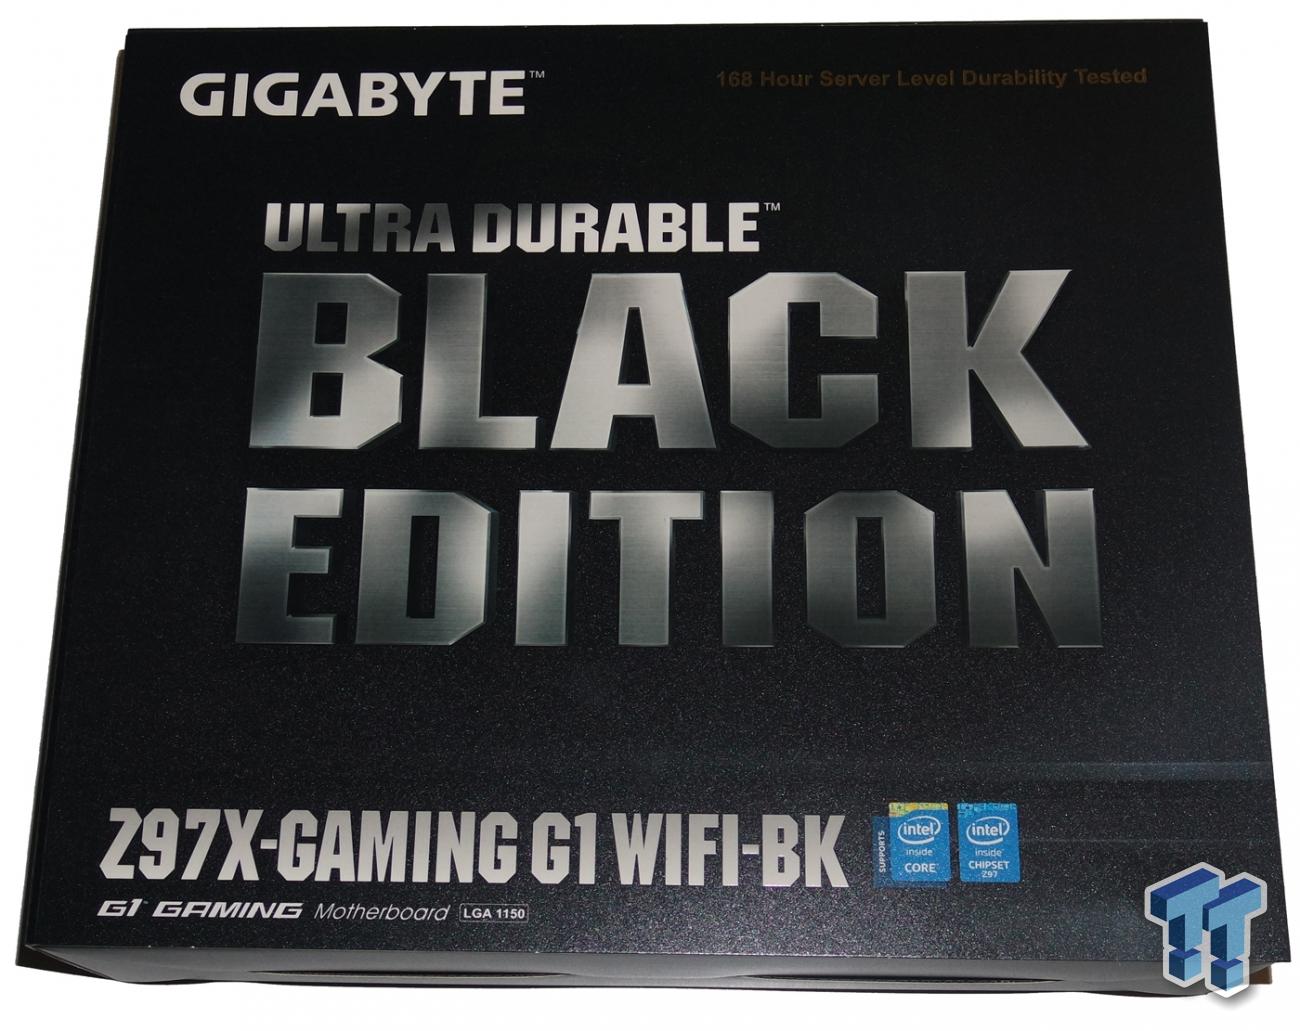 GIGABYTE Z97X GAMING G1 WIFI-BK Black Edition (Intel Z97) Review